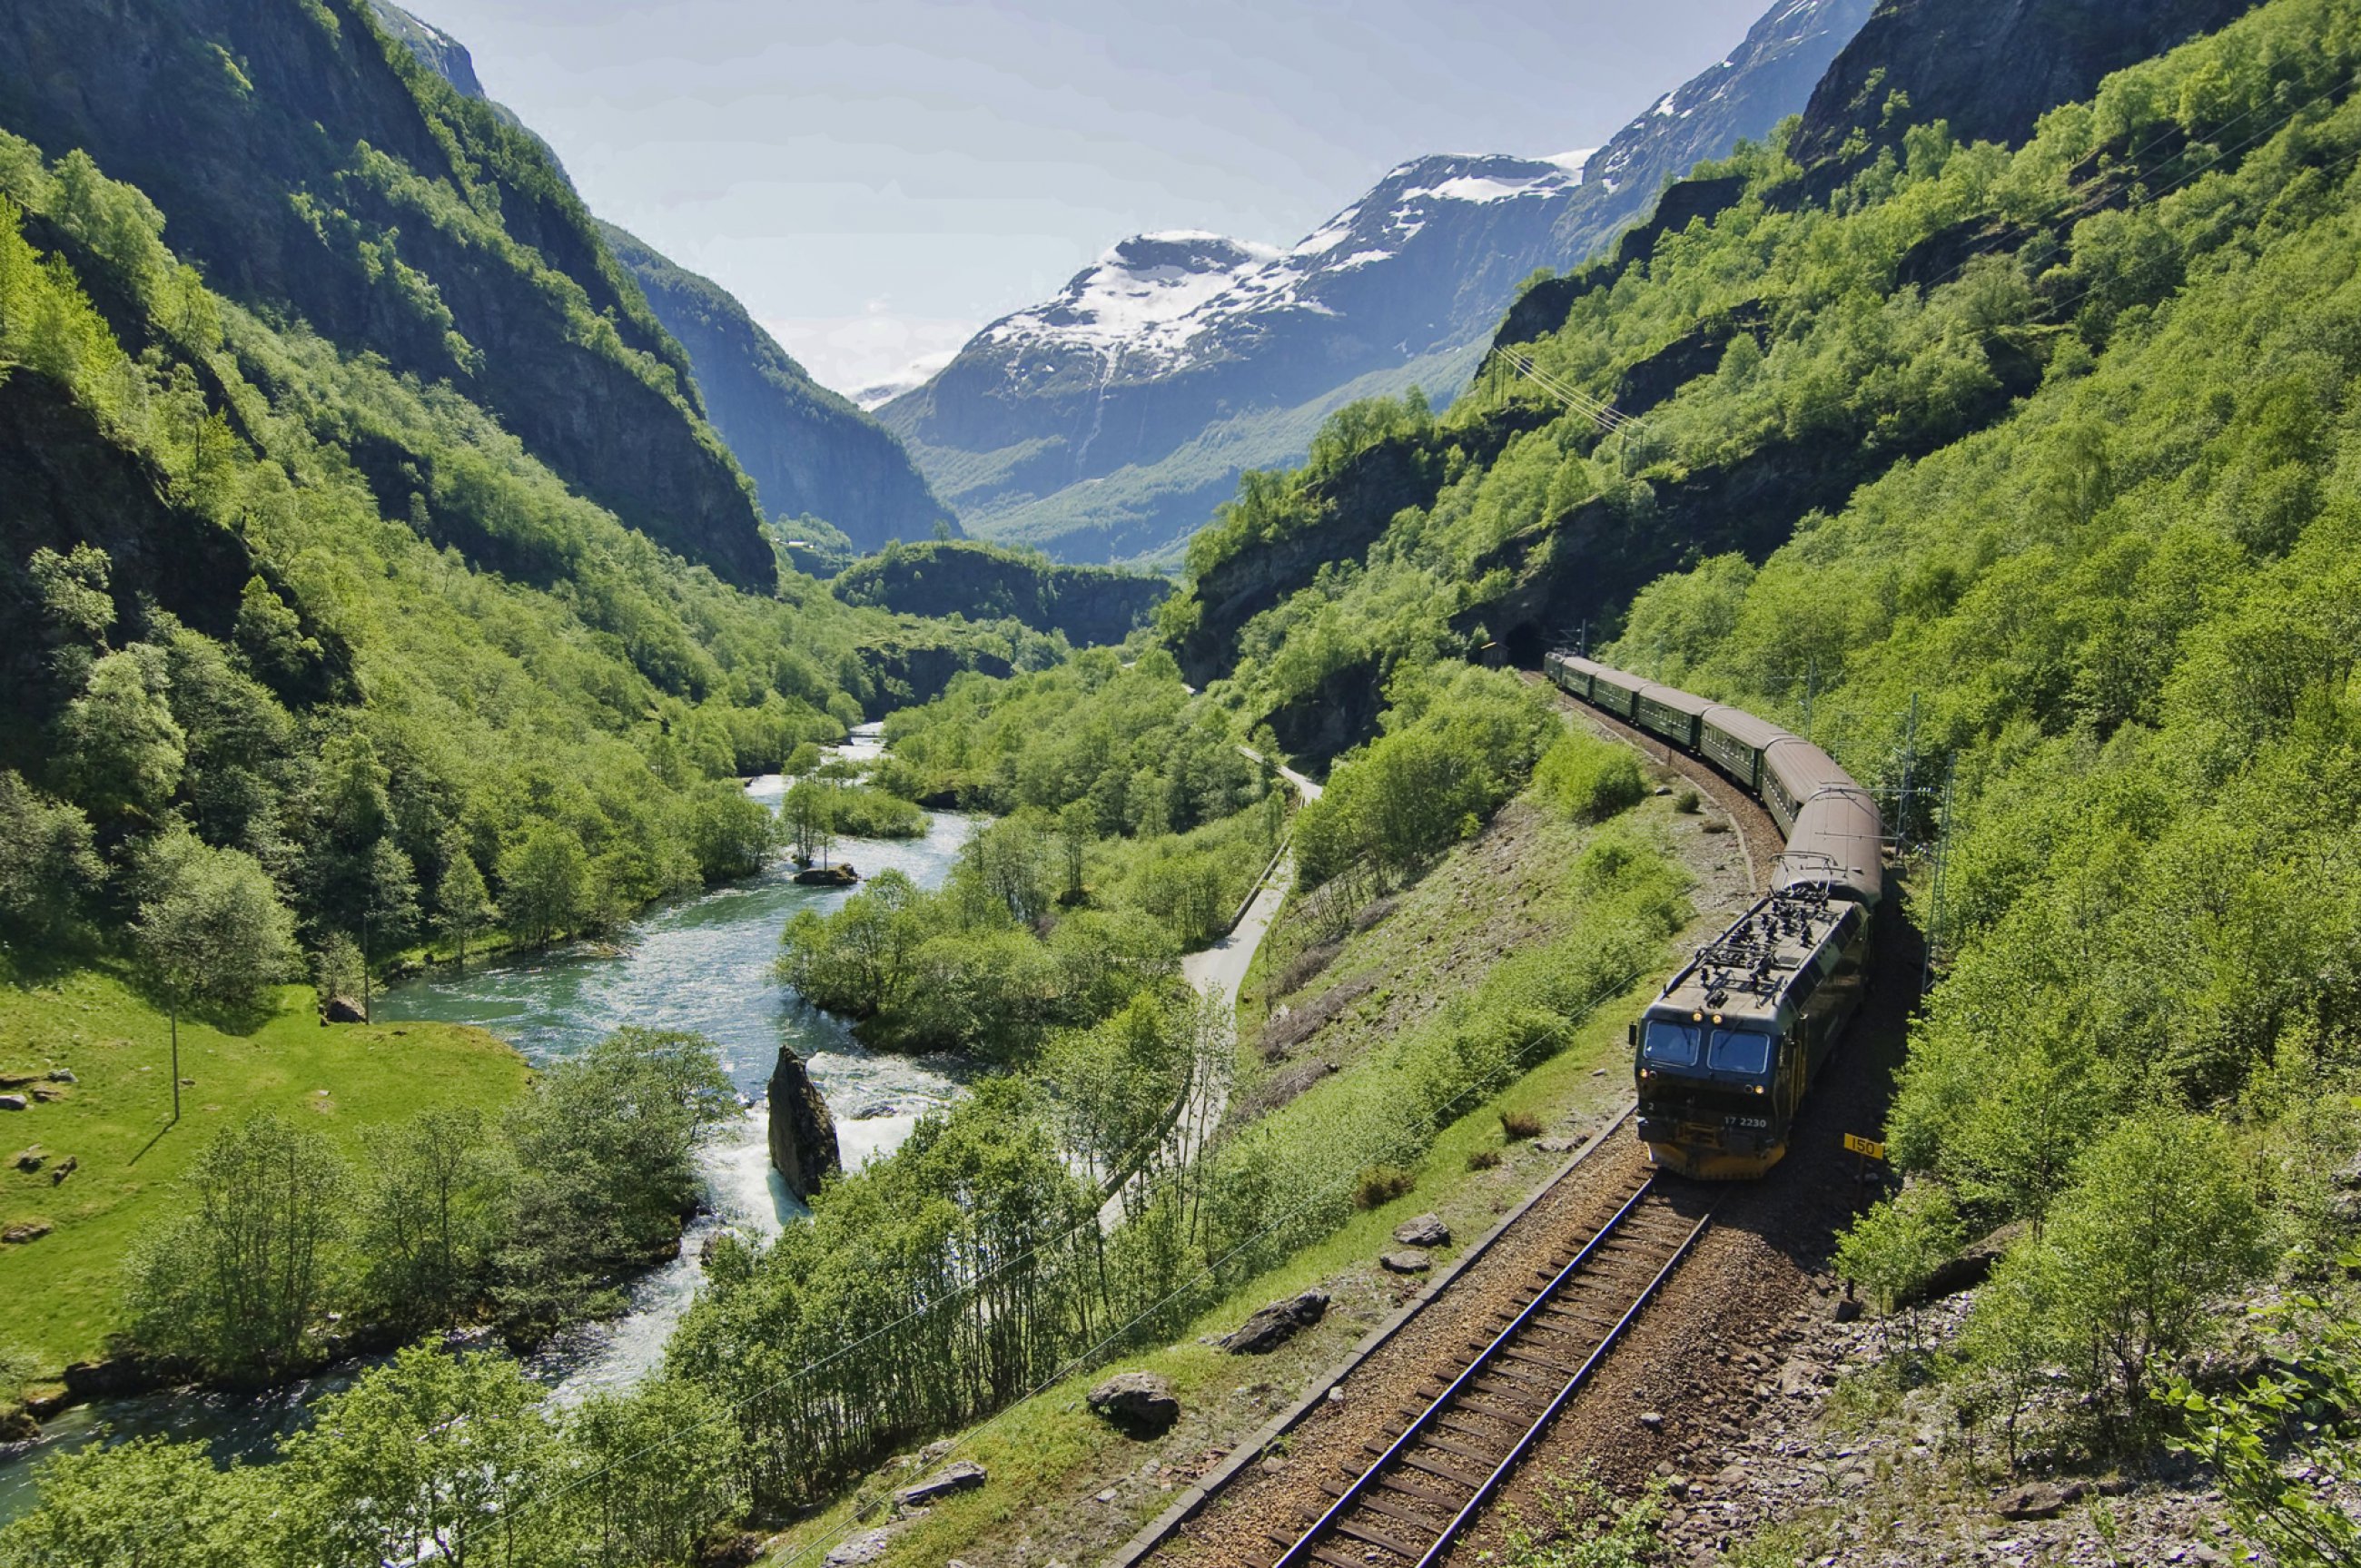 https://bubo.sk/uploads/galleries/5042/fl-m-railway-terje-rakke-nordic-life-as-fjord-norw.jpg